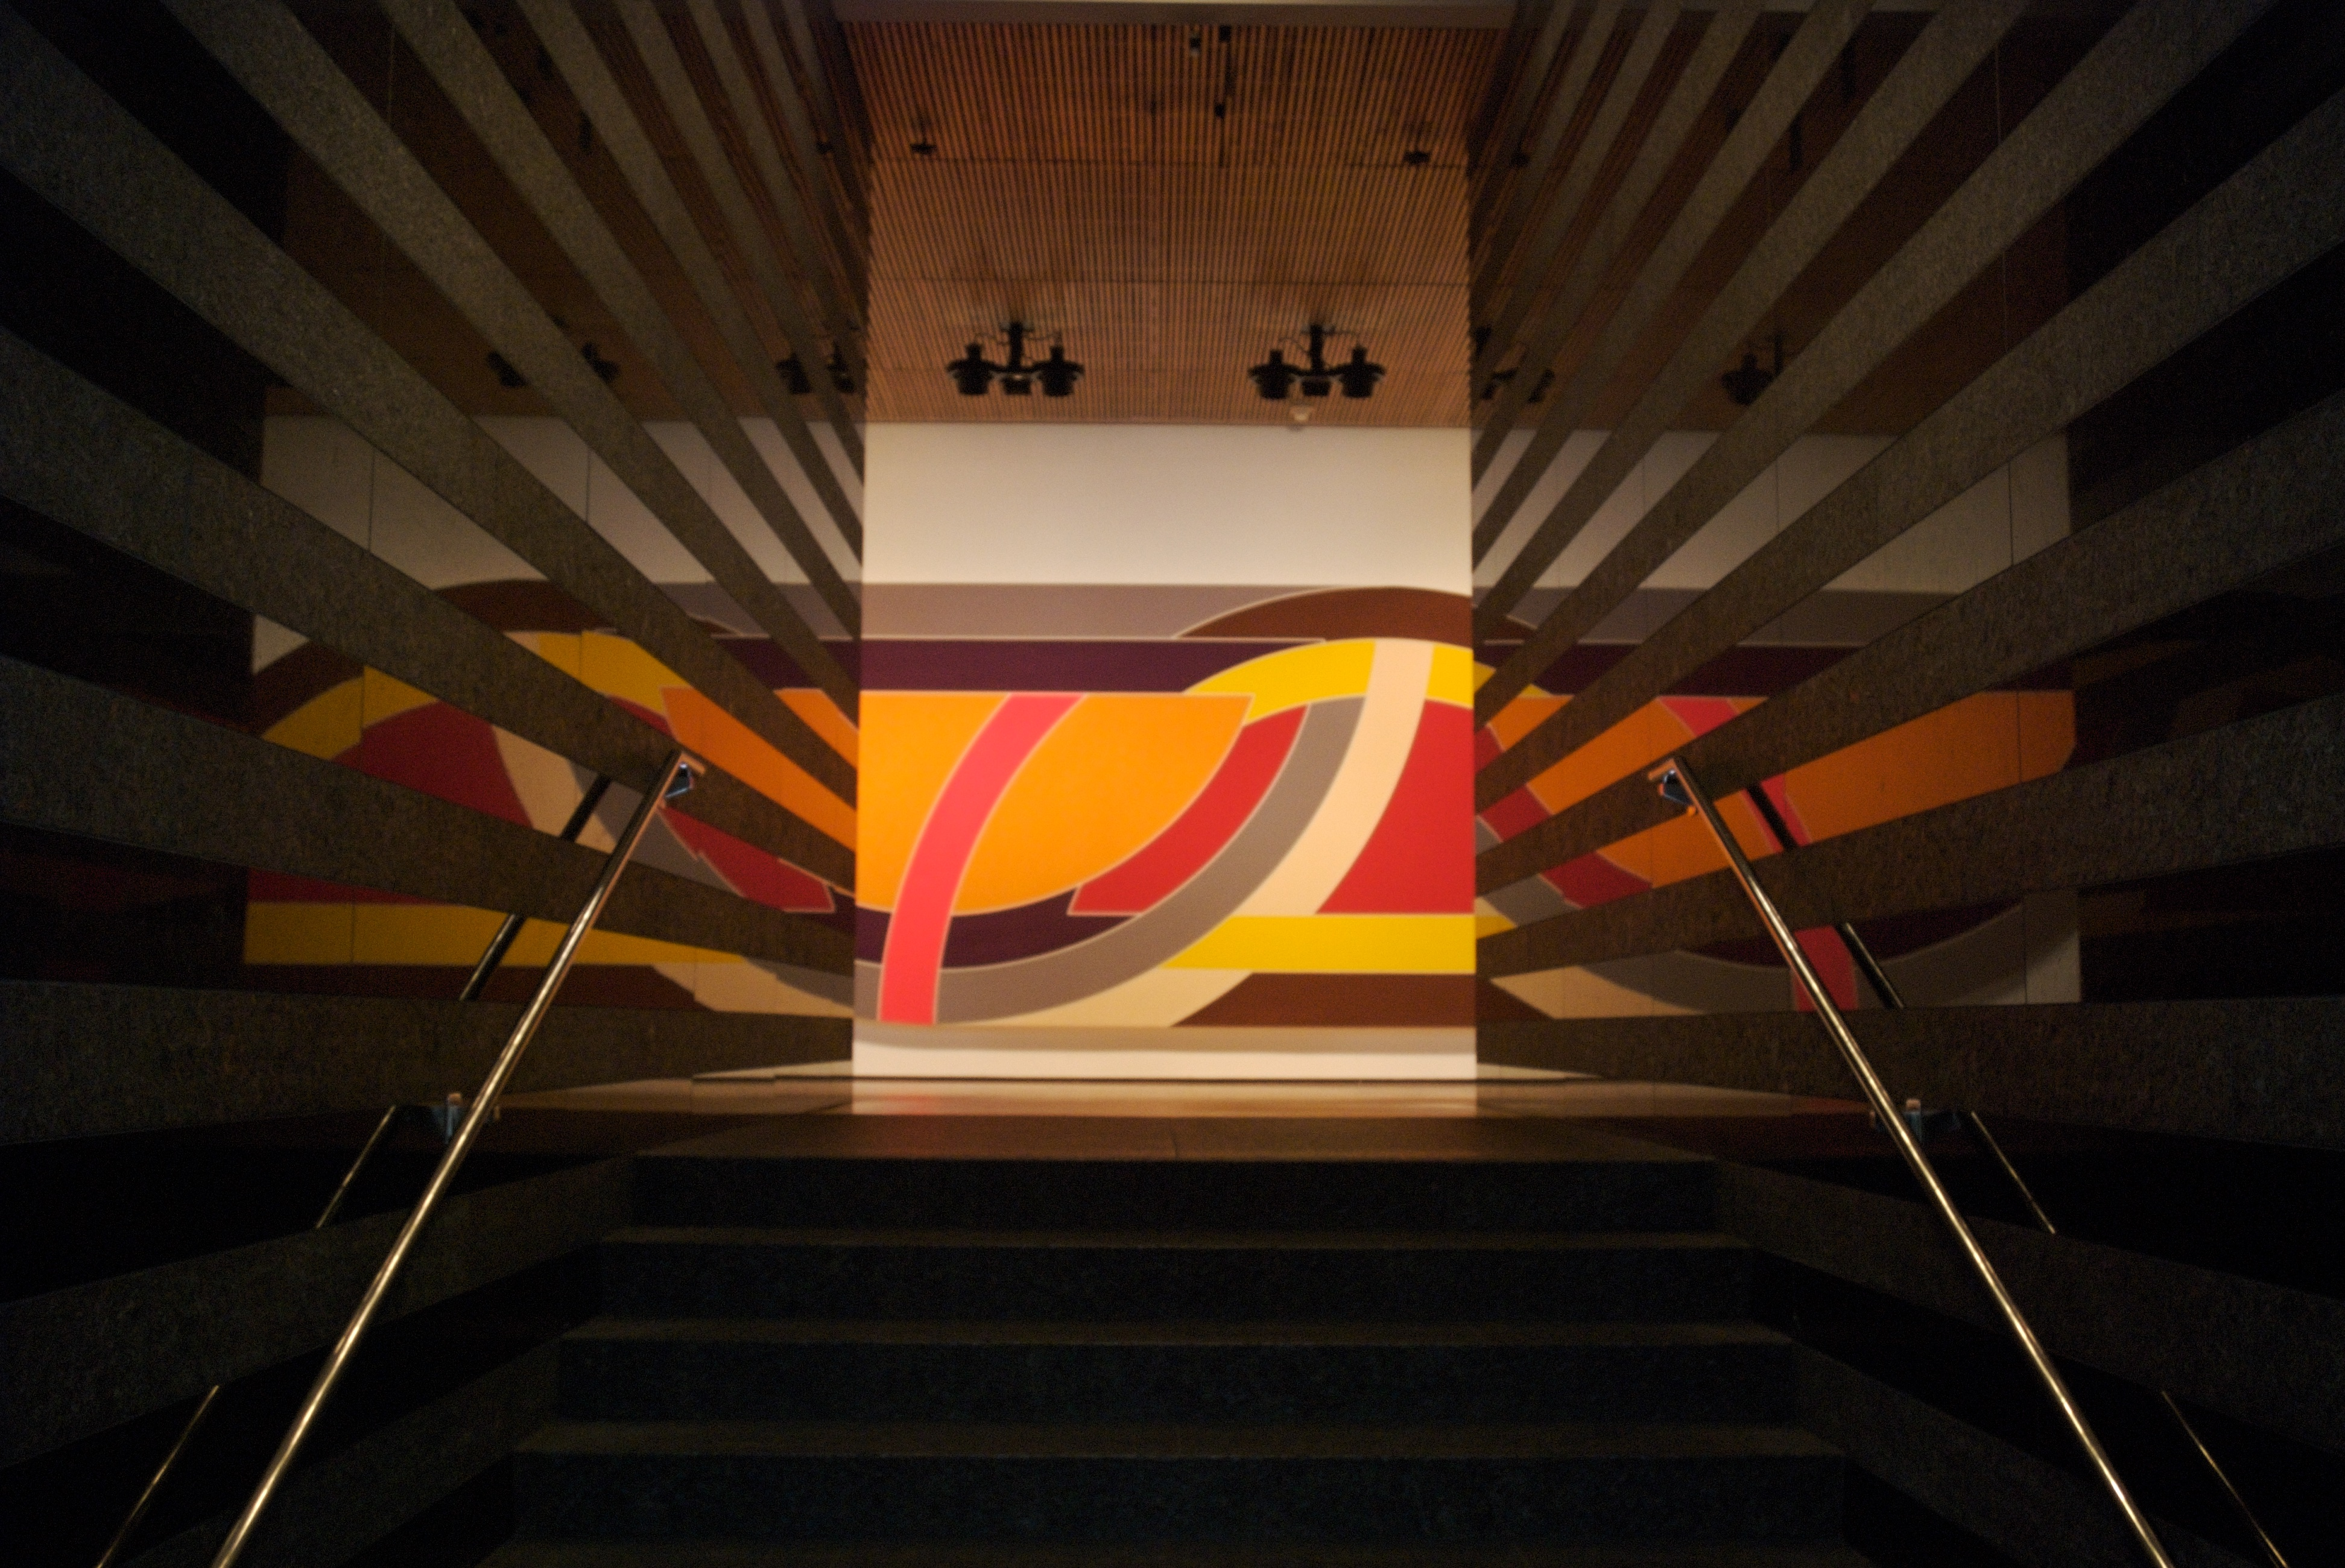 Staircase at San Francisco Modern Art Gallery